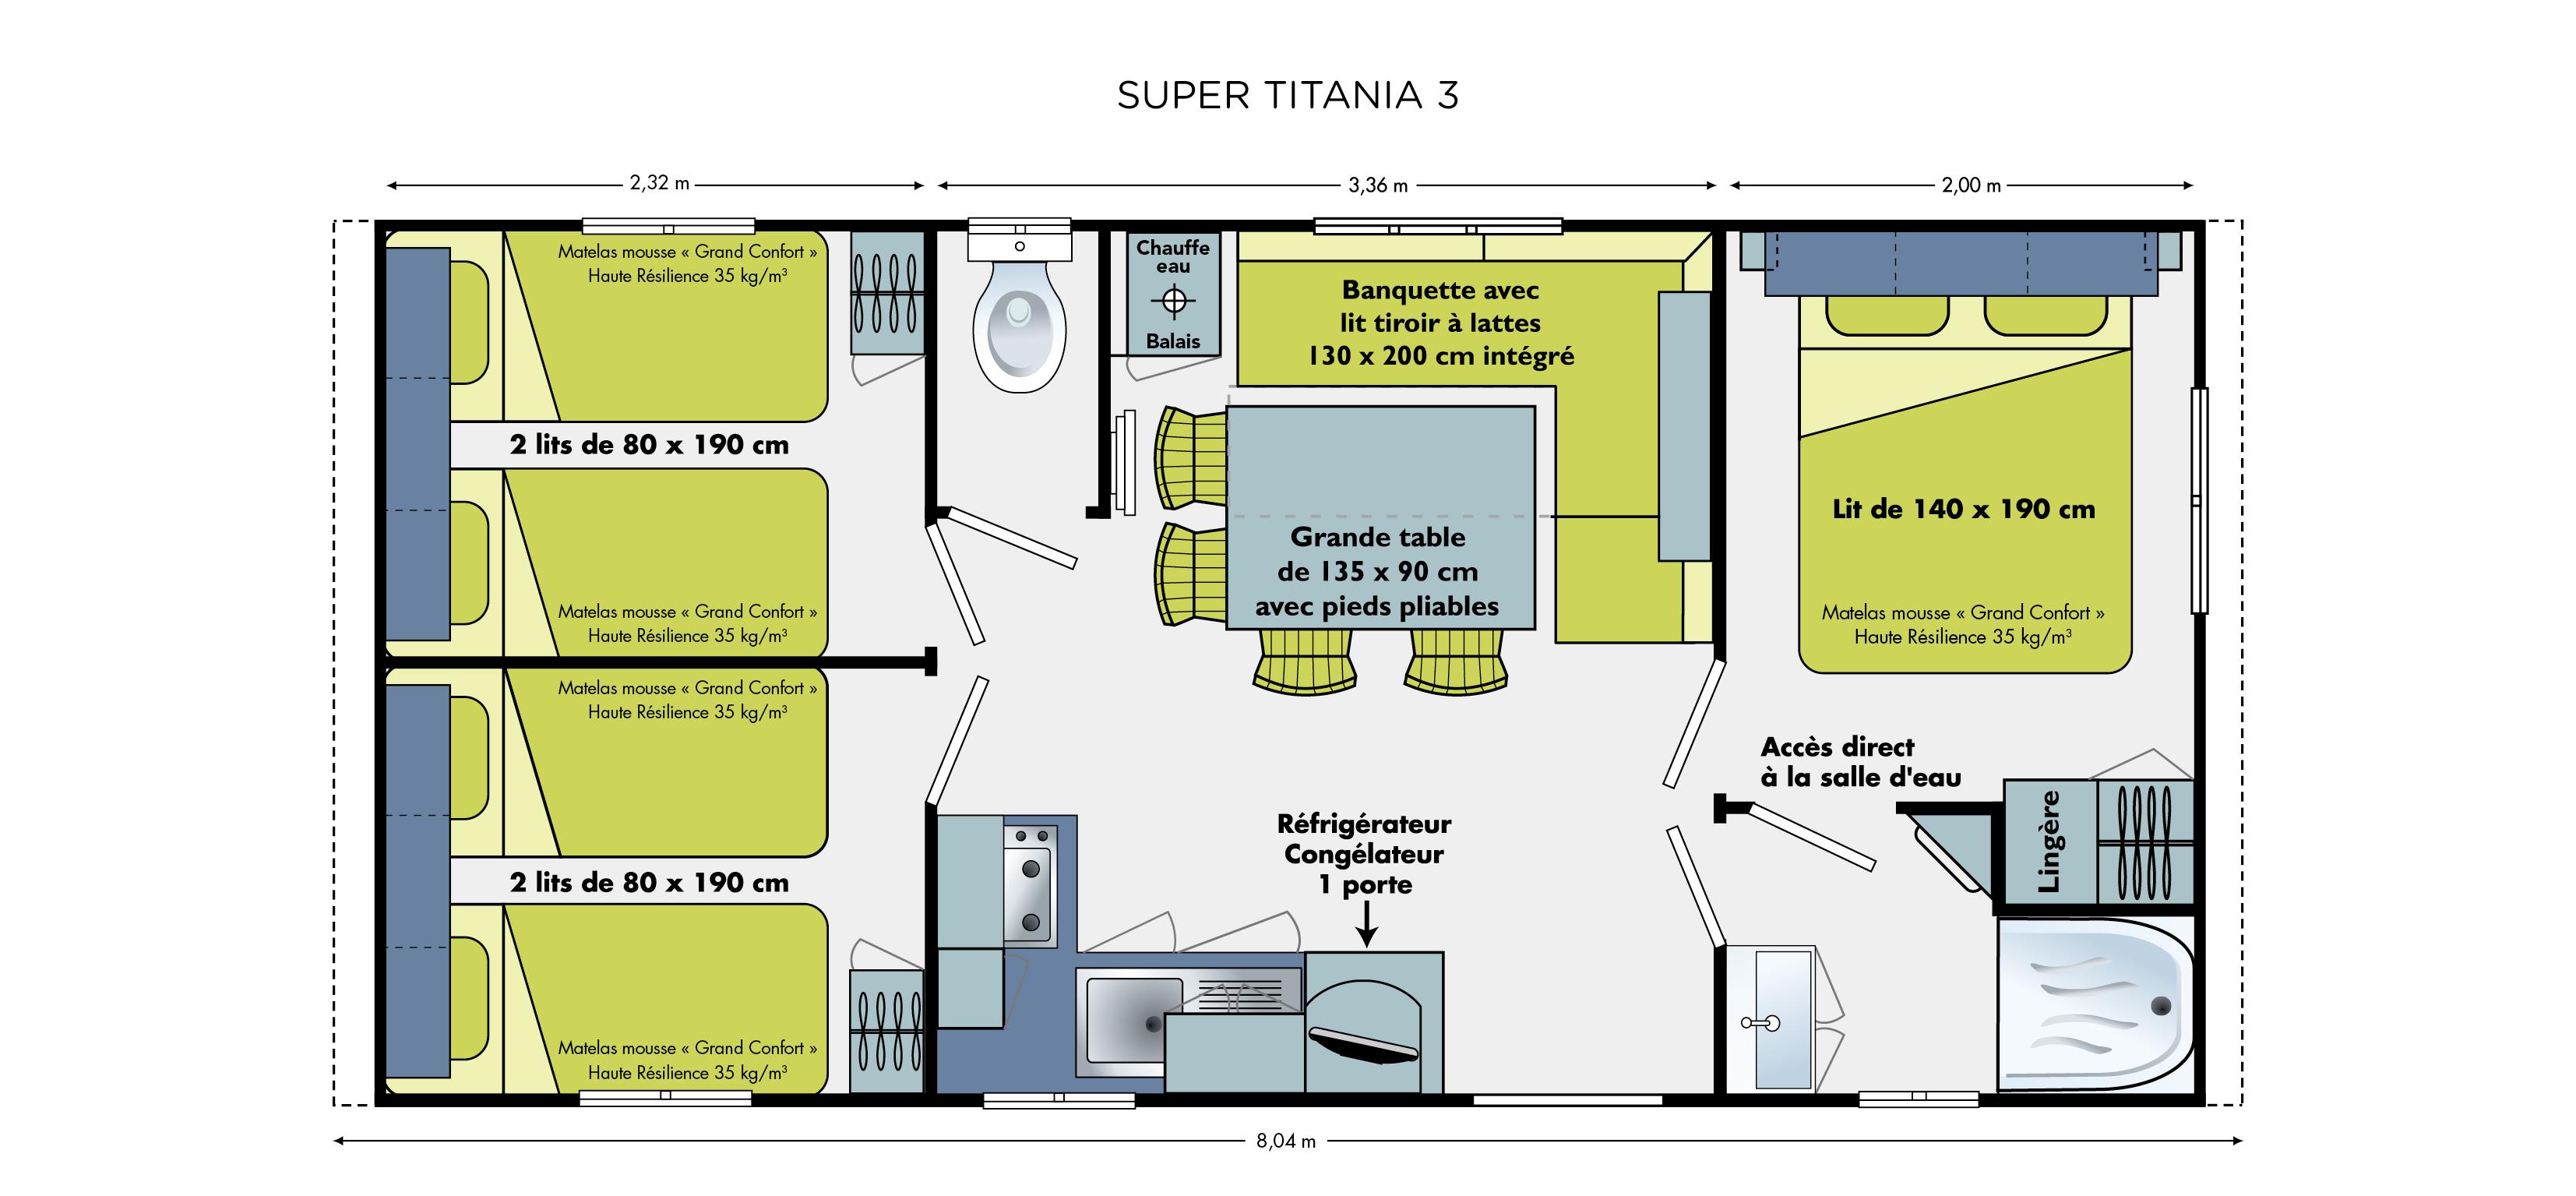 Huuraccommodatie - Stacaravan  Super Titania 3 Chambres - Camping Beau Rivage